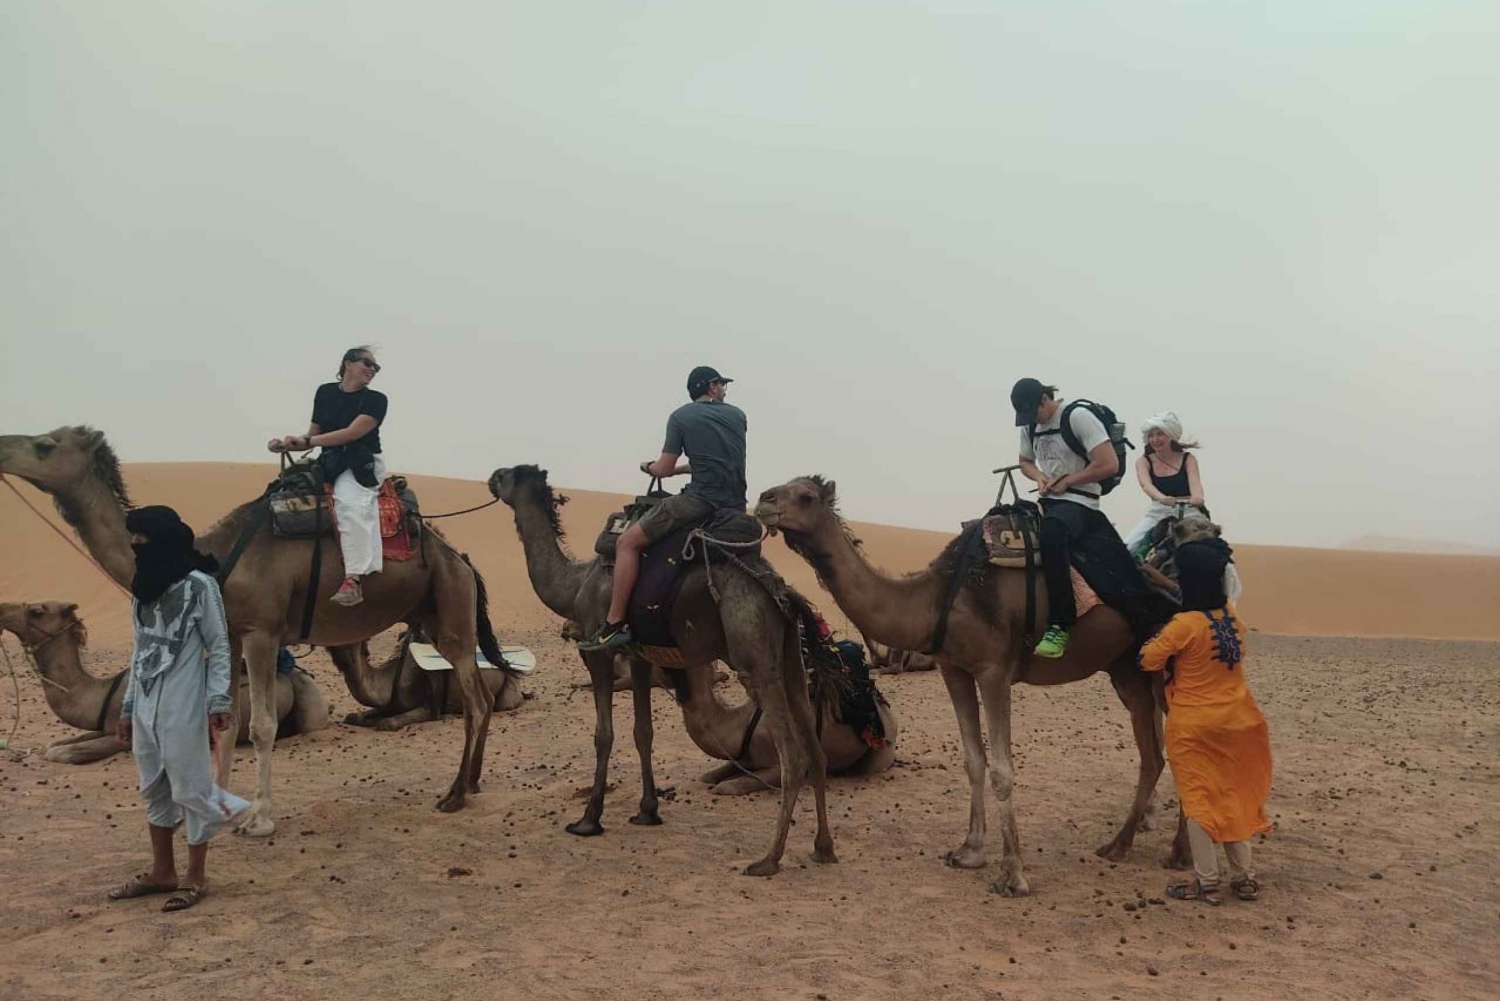 Sunset Camel Ride in Agafay Desert from Marrakech